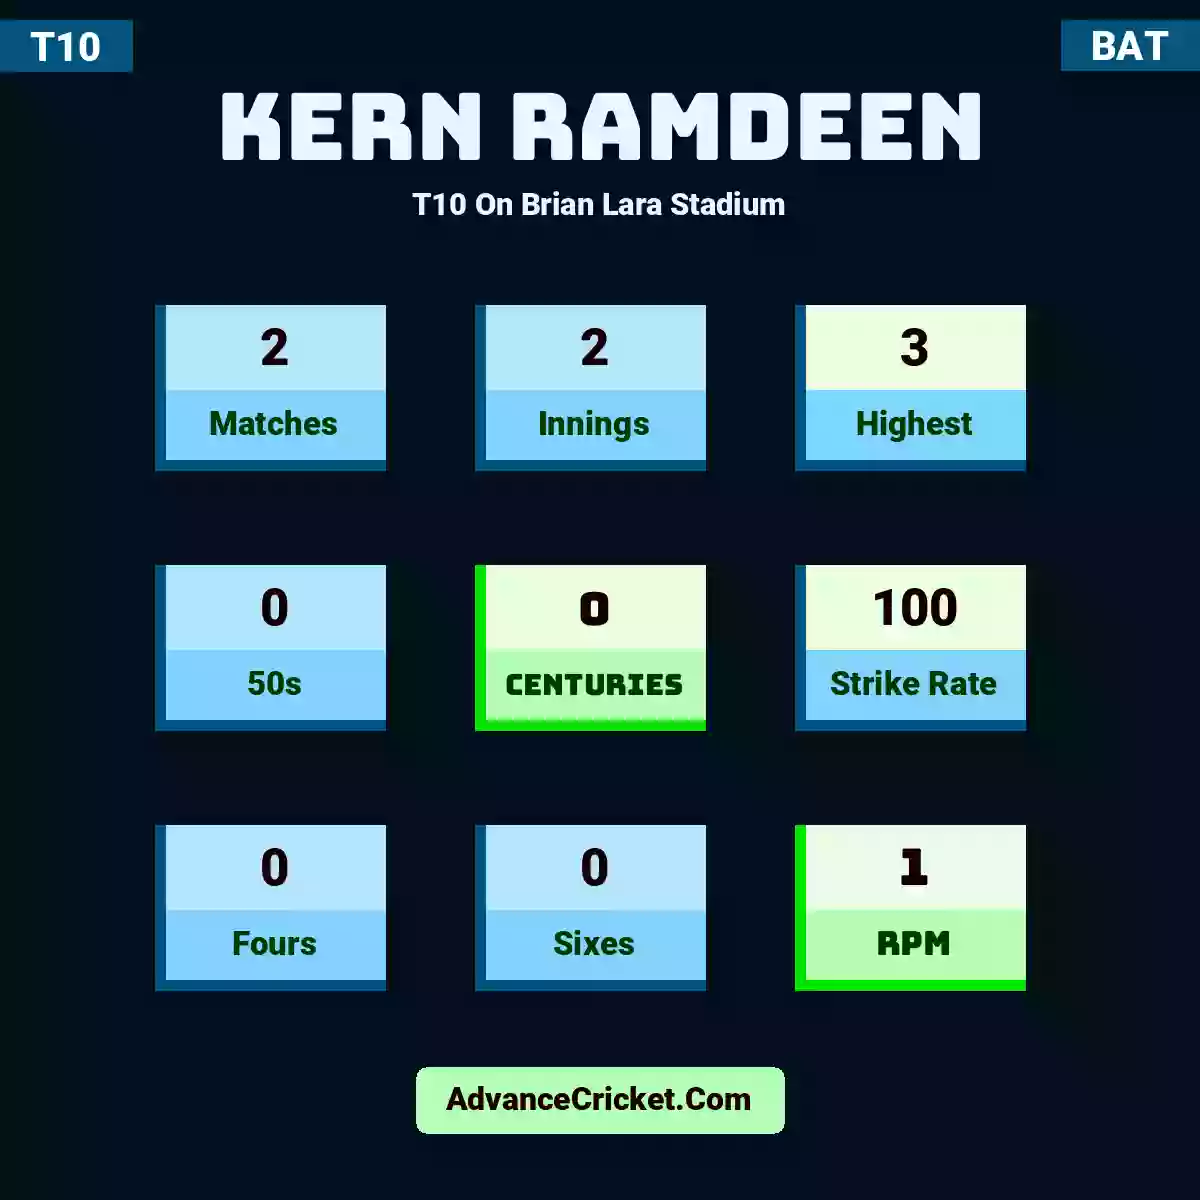 Kern Ramdeen T10  On Brian Lara Stadium, Kern Ramdeen played 2 matches, scored 3 runs as highest, 0 half-centuries, and 0 centuries, with a strike rate of 100. K.Ramdeen hit 0 fours and 0 sixes, with an RPM of 1.